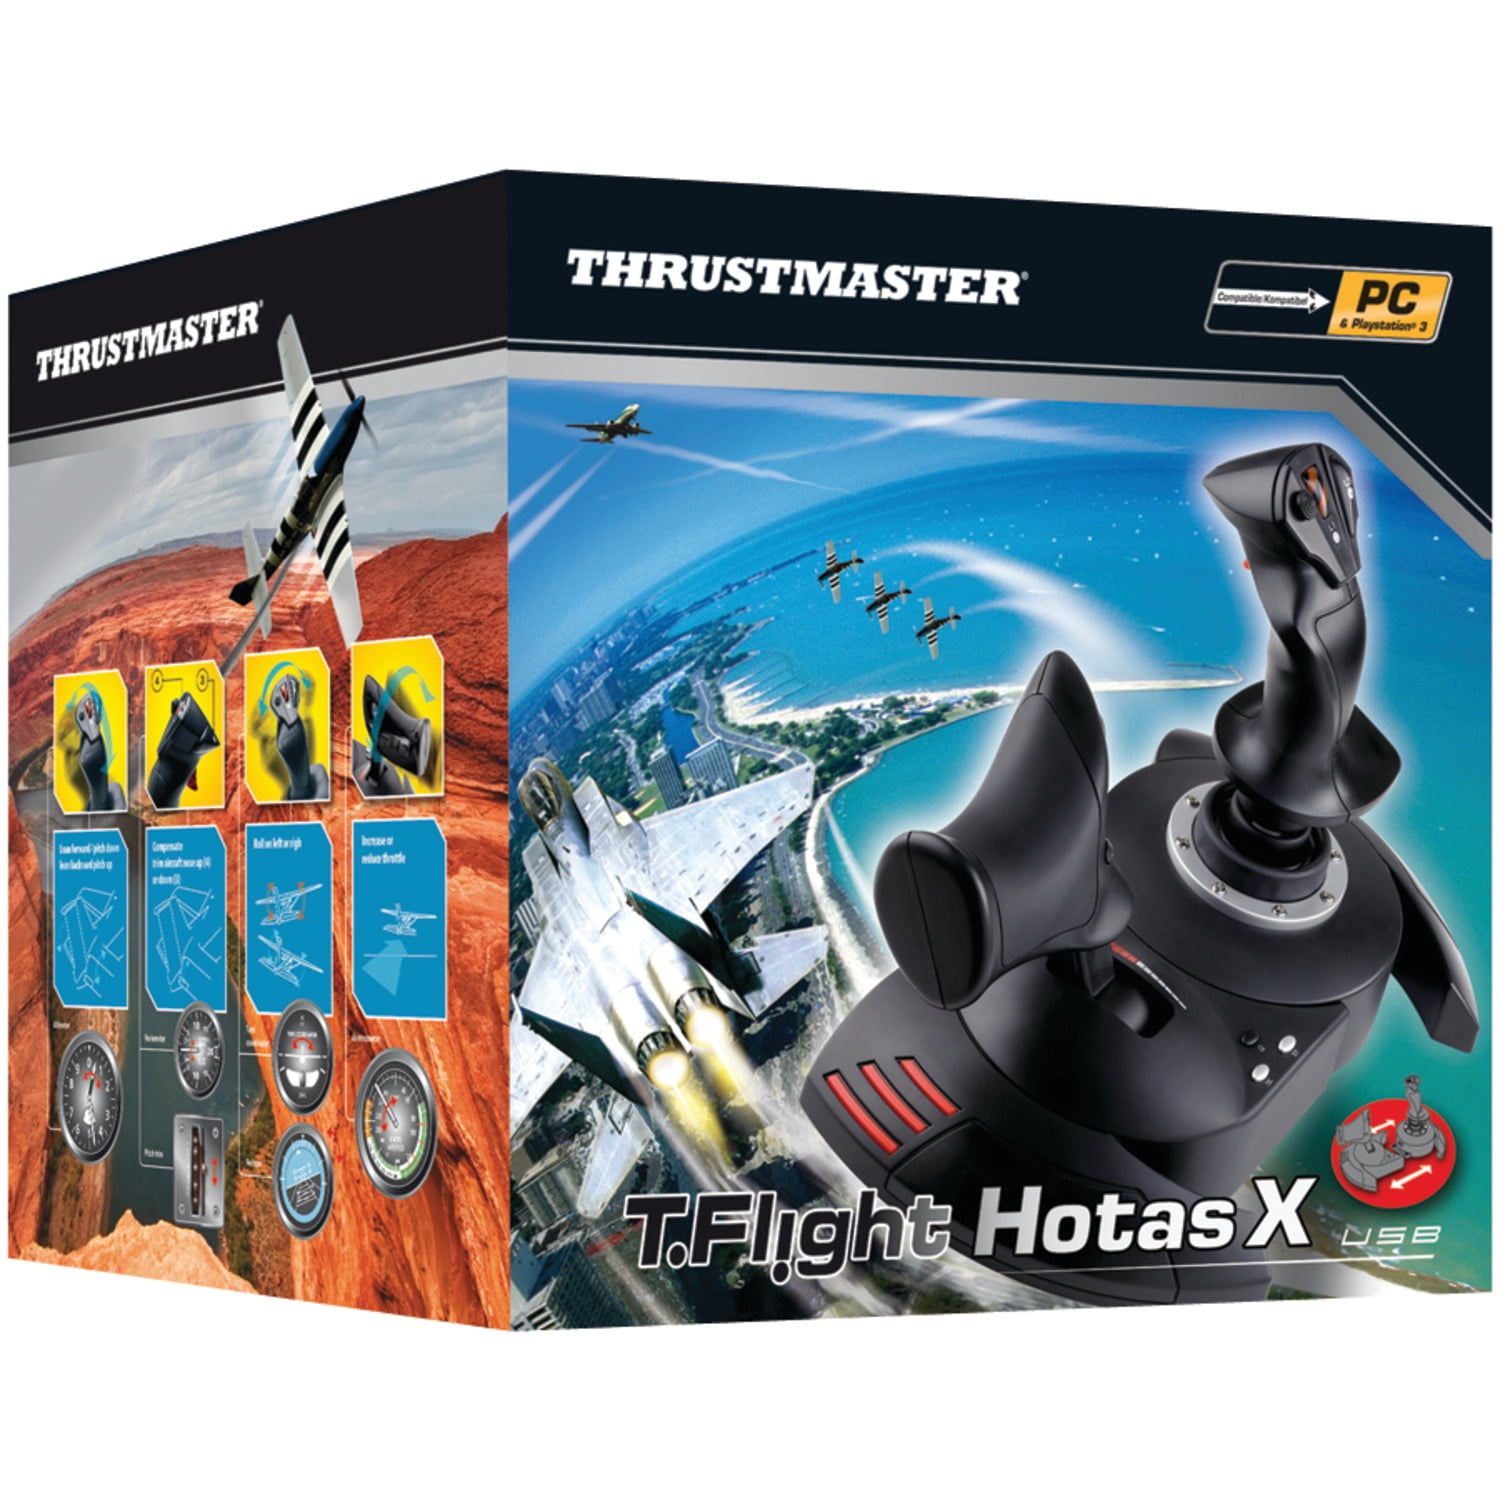 Thrustmaster T-Flight Hotas X Flight Throttle Stick Control, PS3 and 